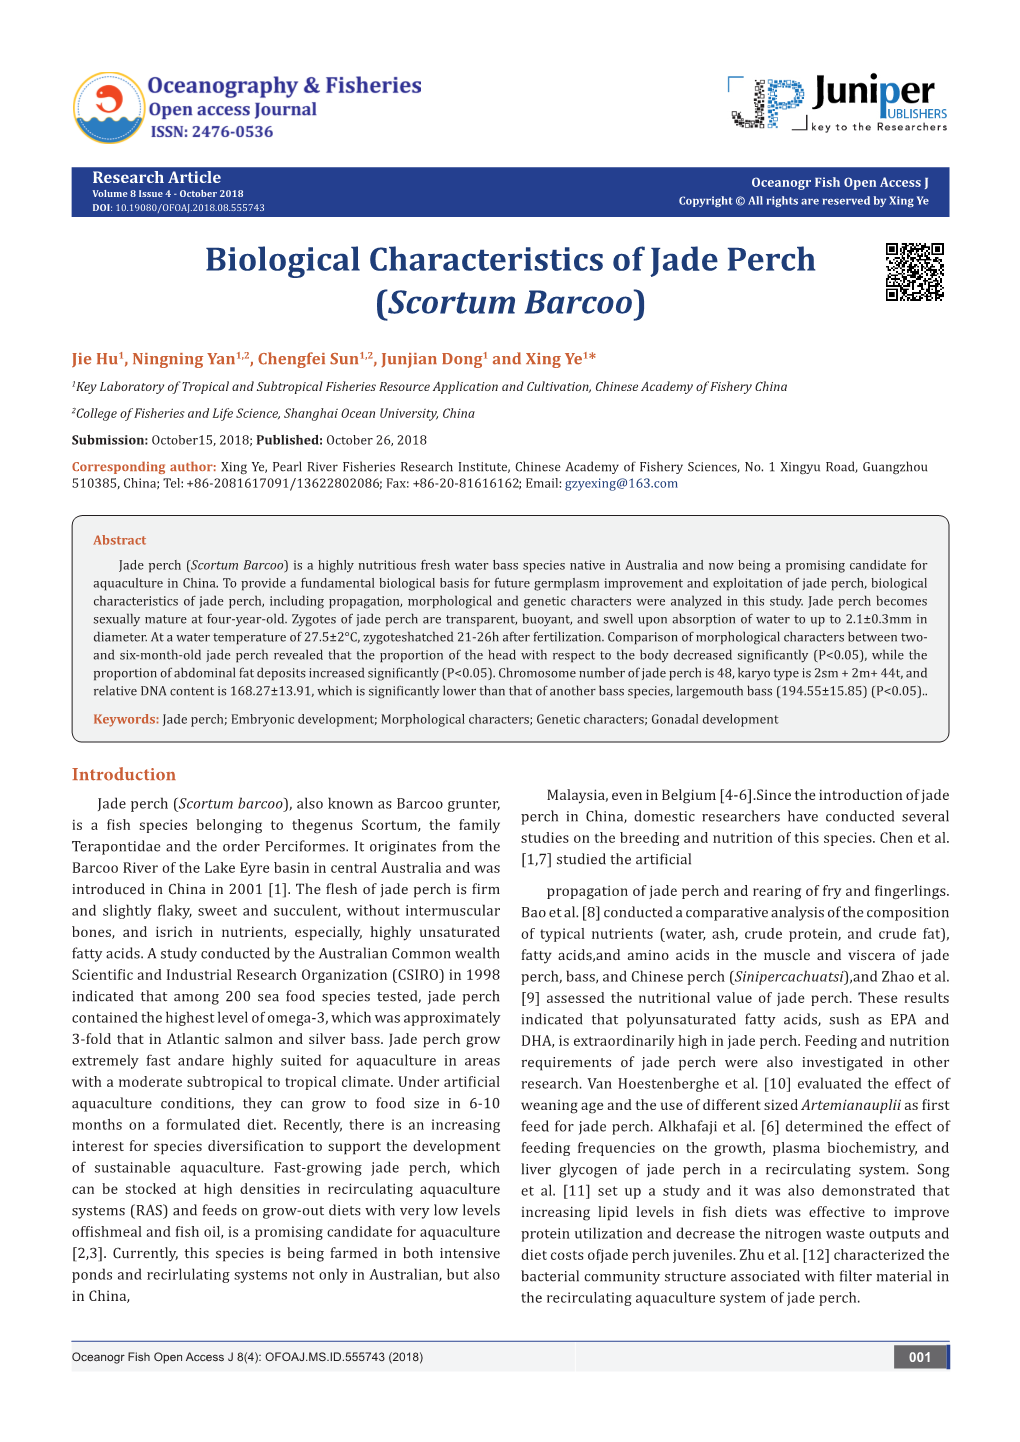 Biological Characteristics of Jade Perch (Scortumbarcoo)